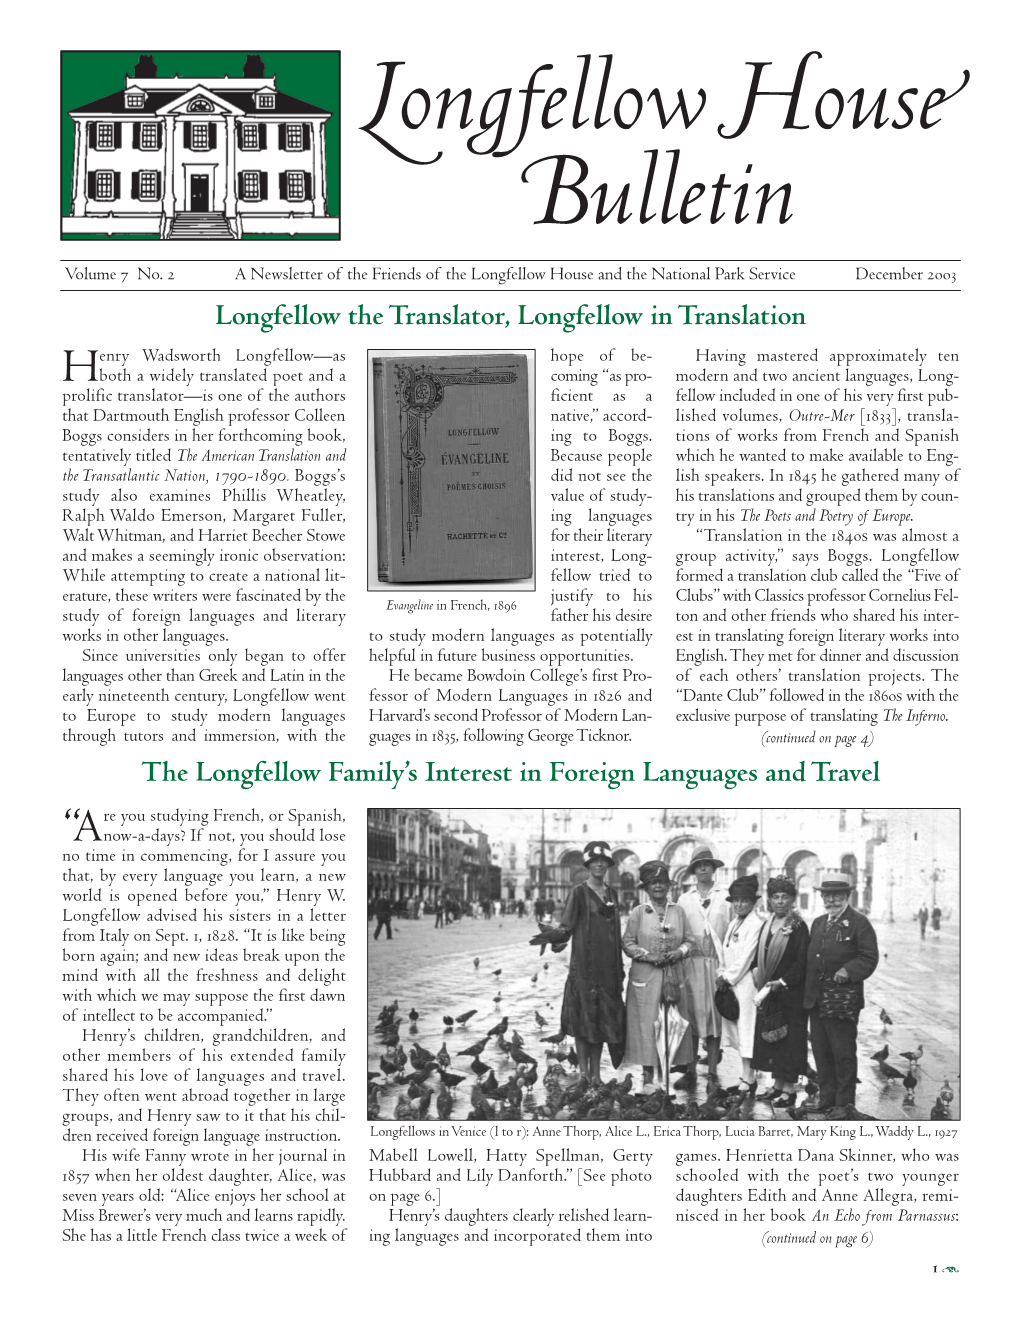 Longfellow House Bulletin, Vol. 7, No. 2, December 2003